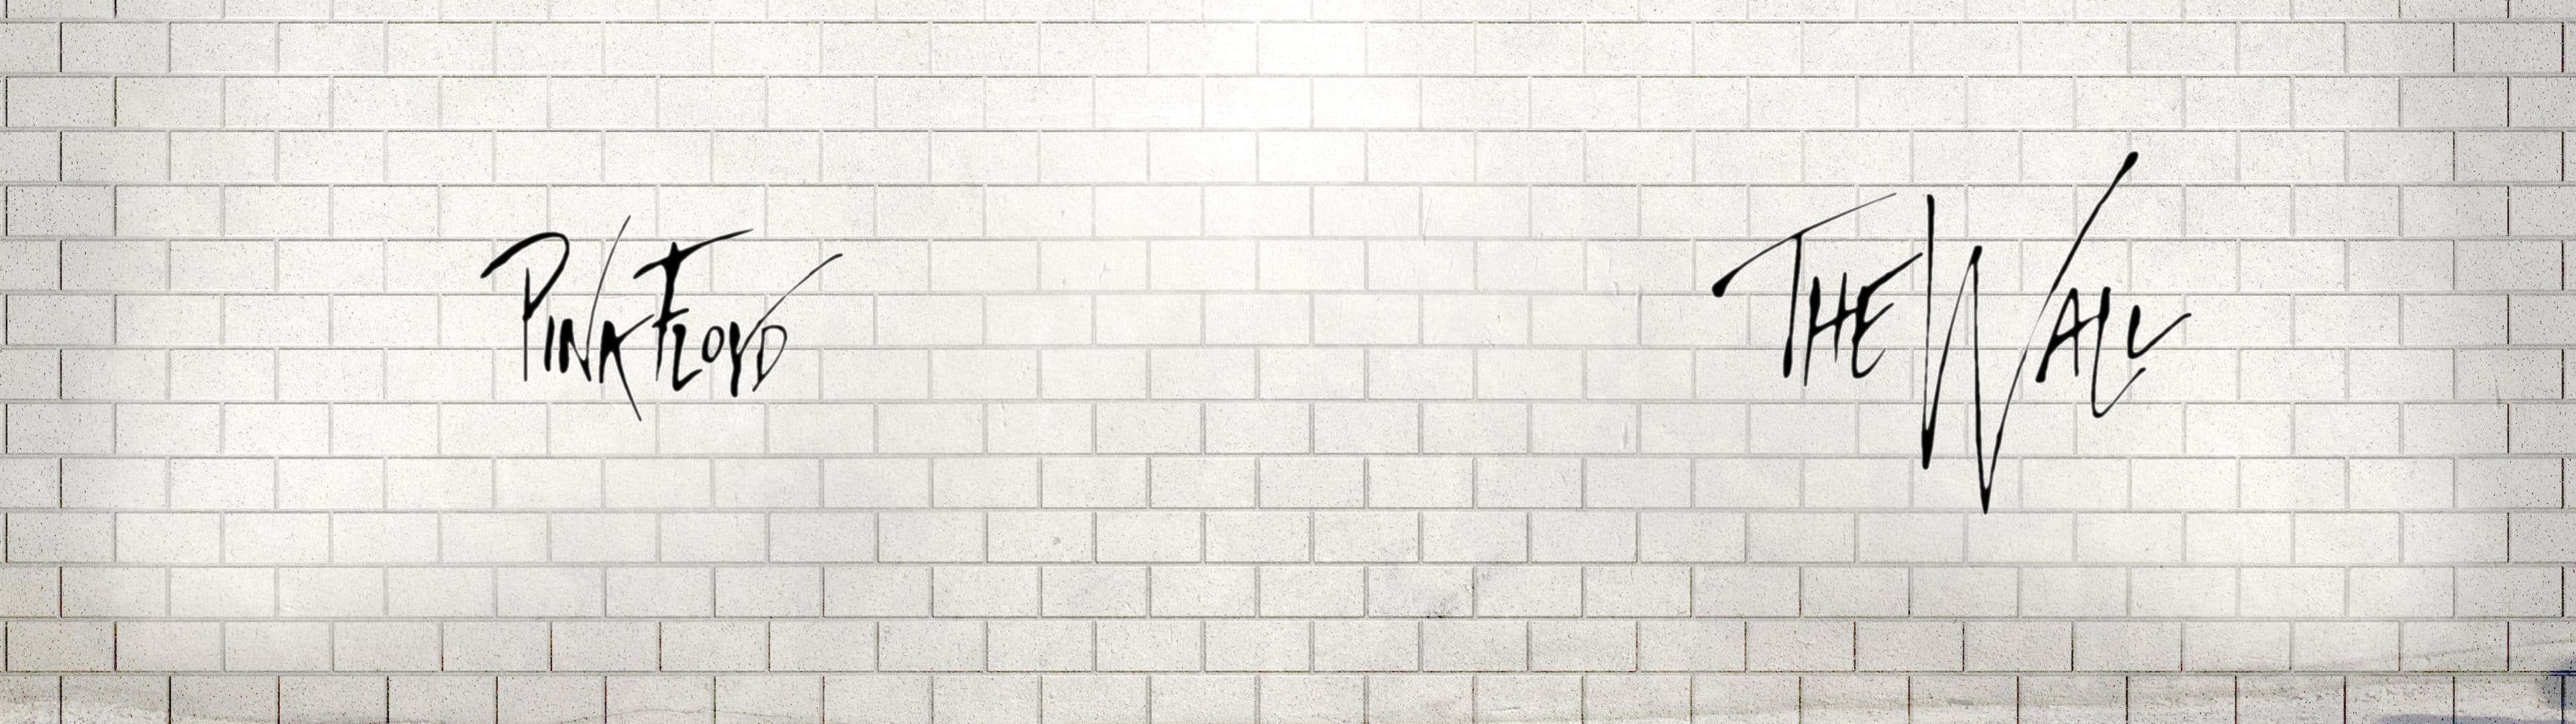 Musikikonisktpink Floyds The Wall Wallpaper